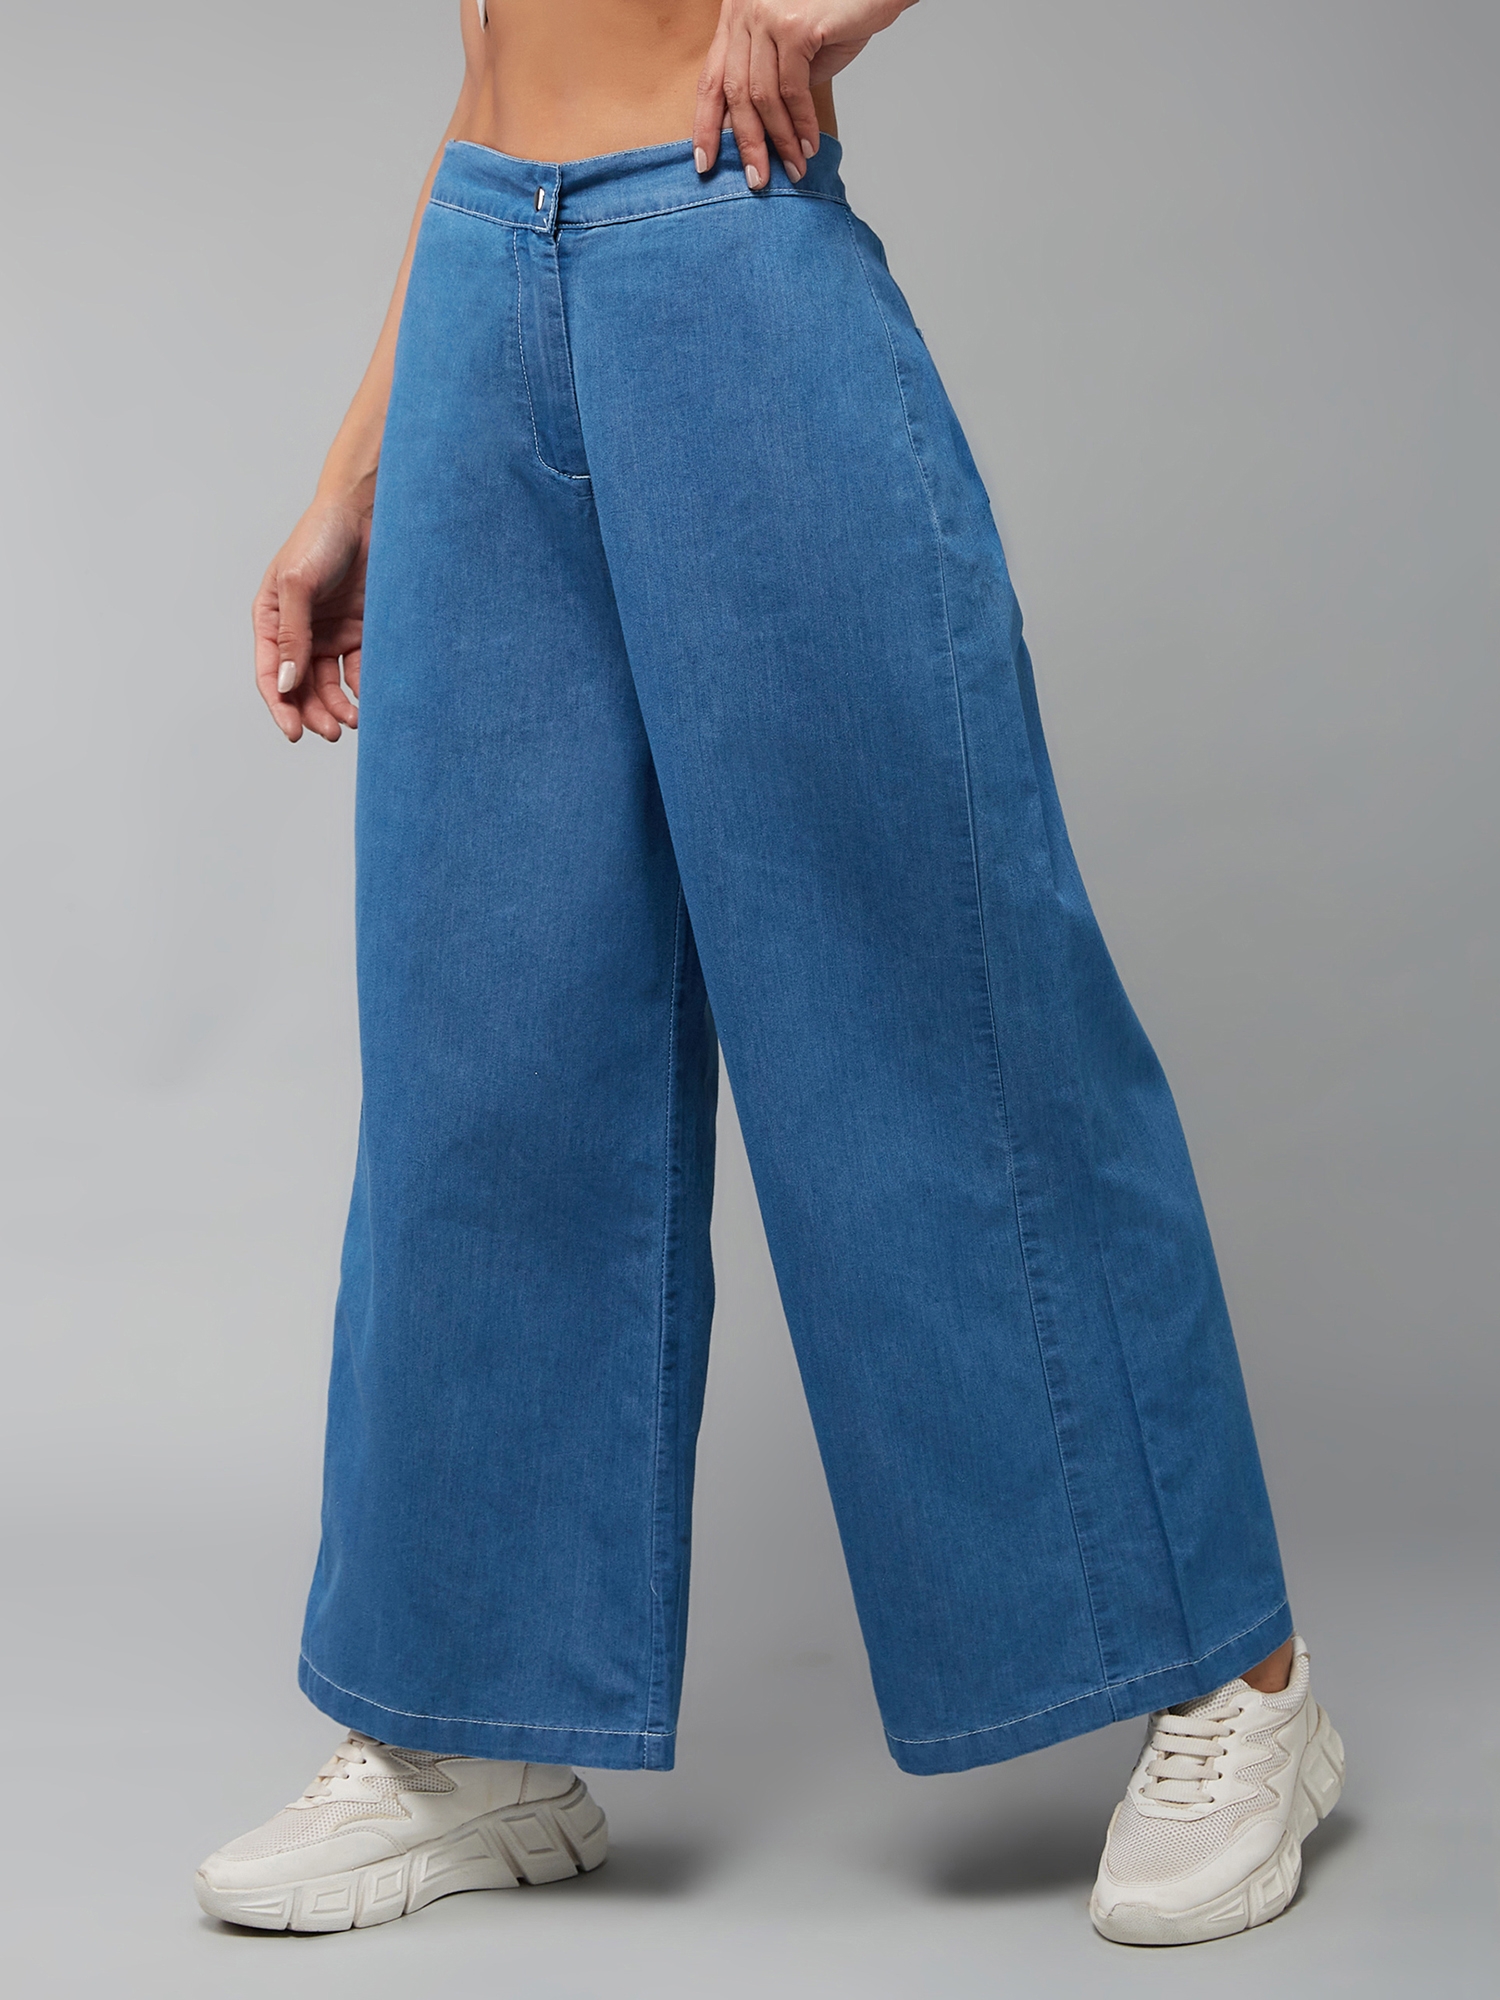 Fashion Women Hole Slim Wide Leg Denim Trousers Lady Jeans | Jumia Nigeria